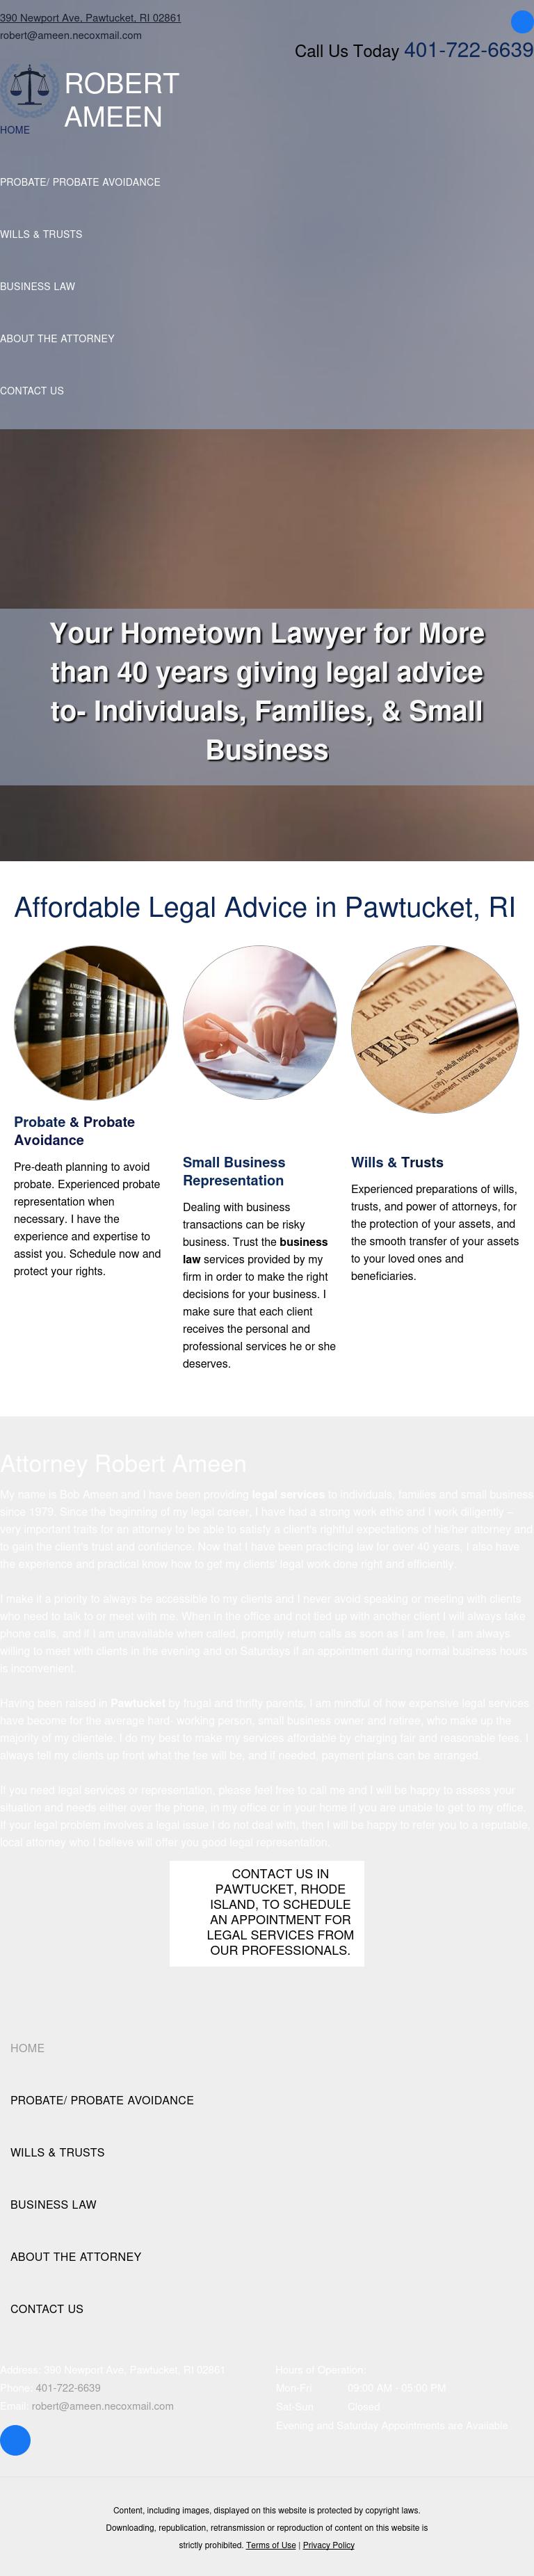 Robert J. Ameen Attorney at Law - Pawtucket RI Lawyers